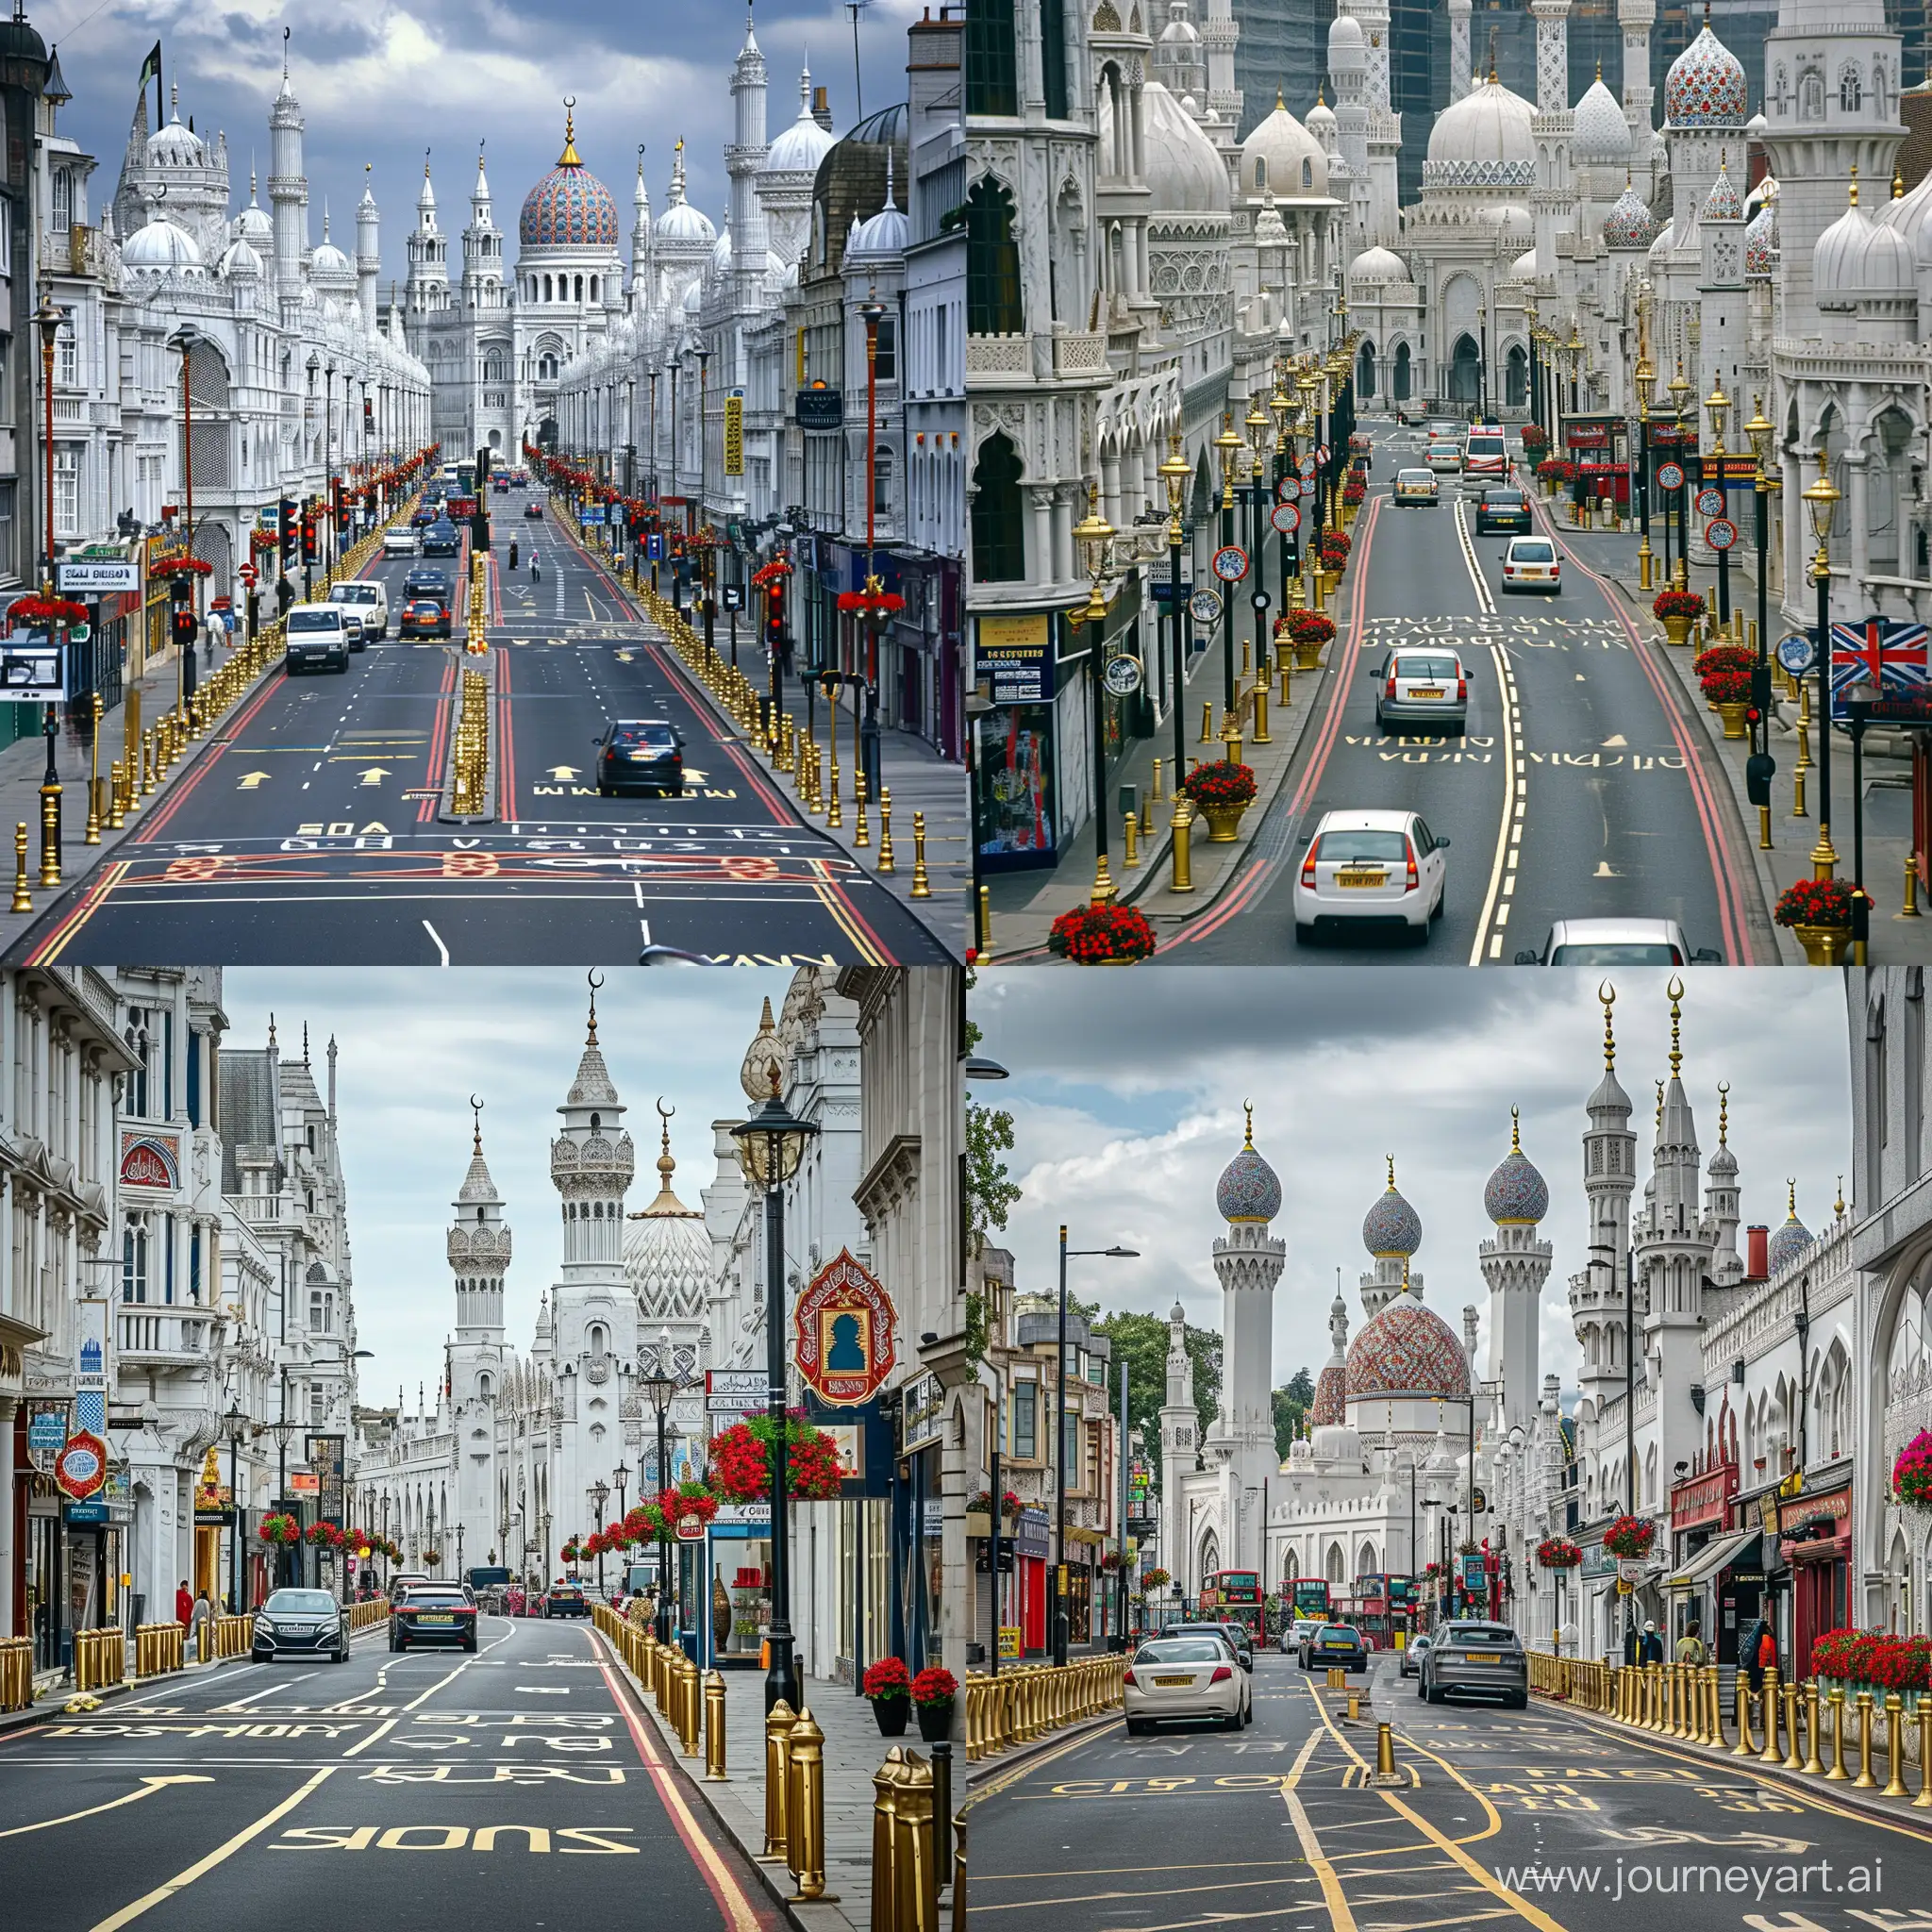 Vibrant-Islamic-Architecture-Adorning-Bustling-London-Street